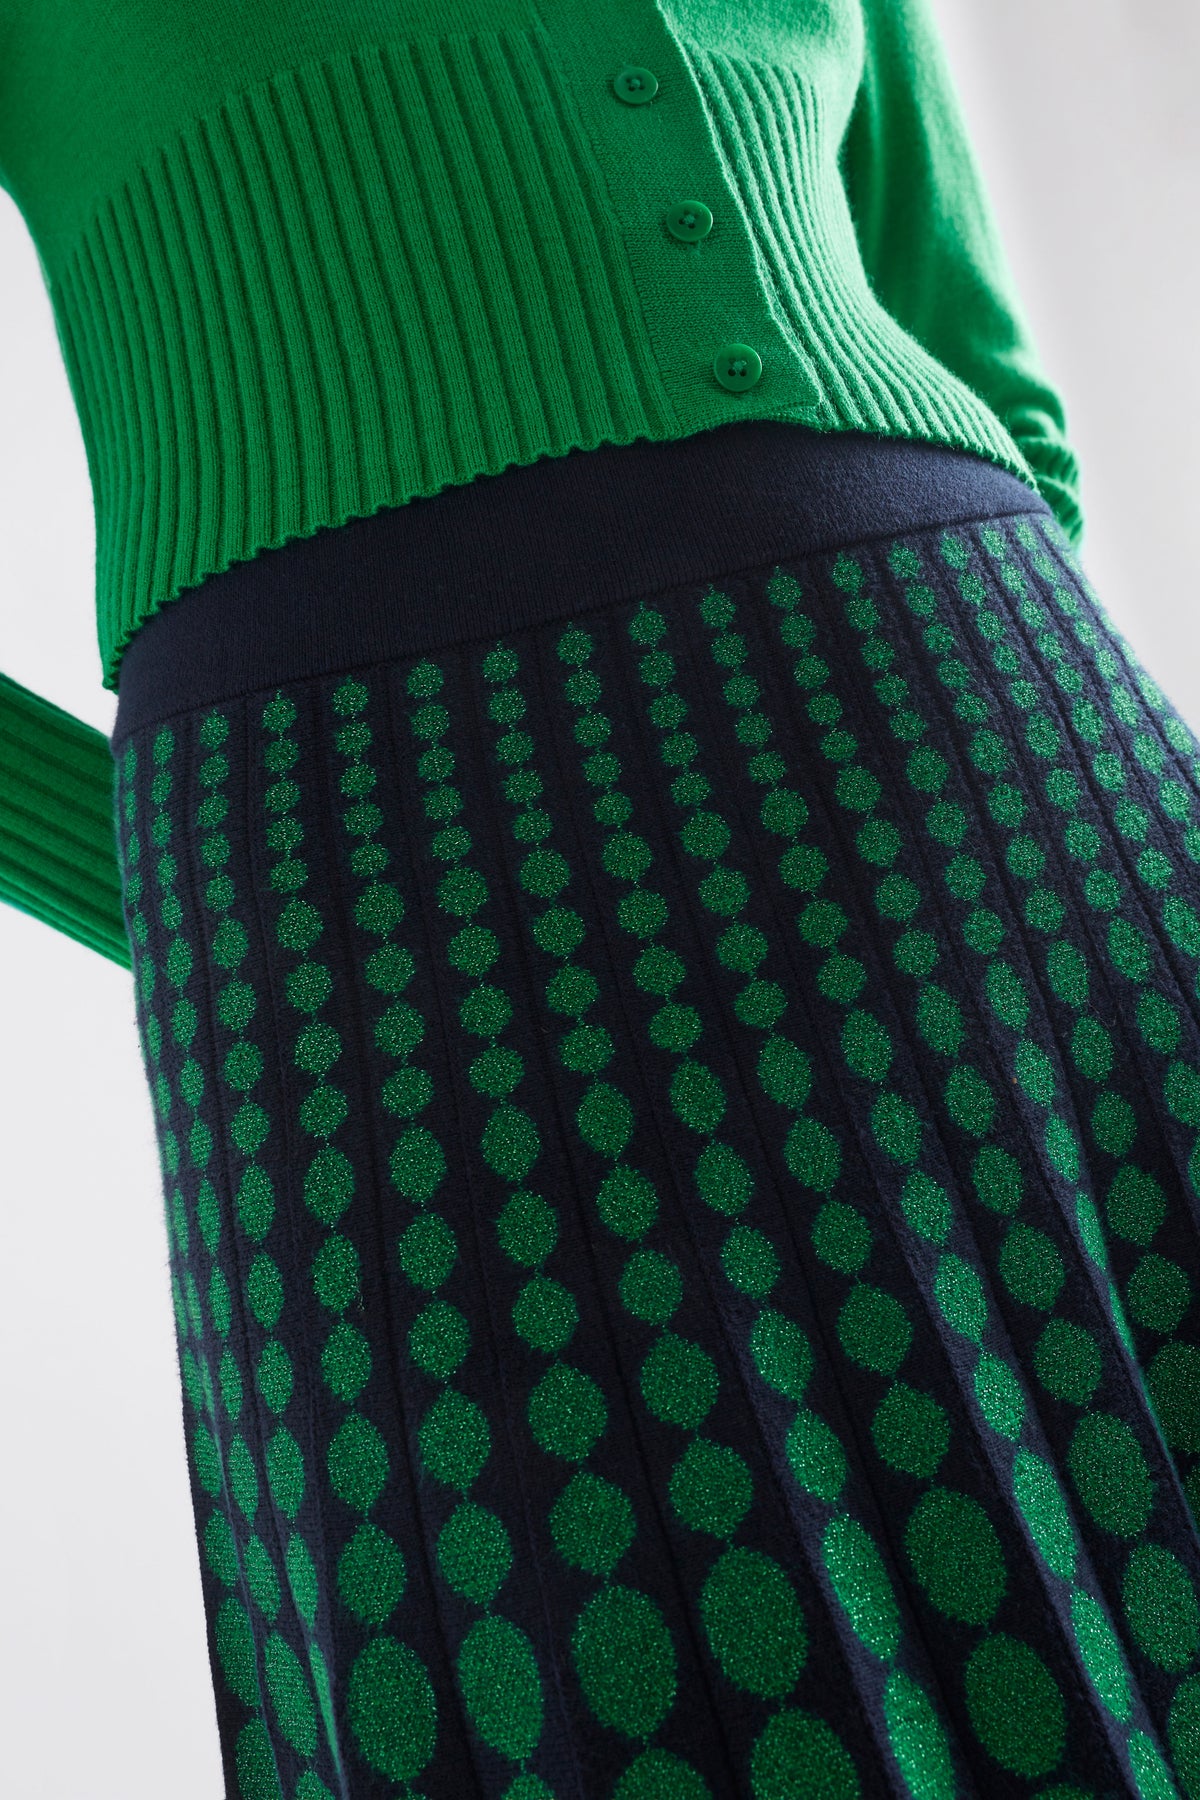 ELK | Leira Knit Skirt - Navy/Green Metallic